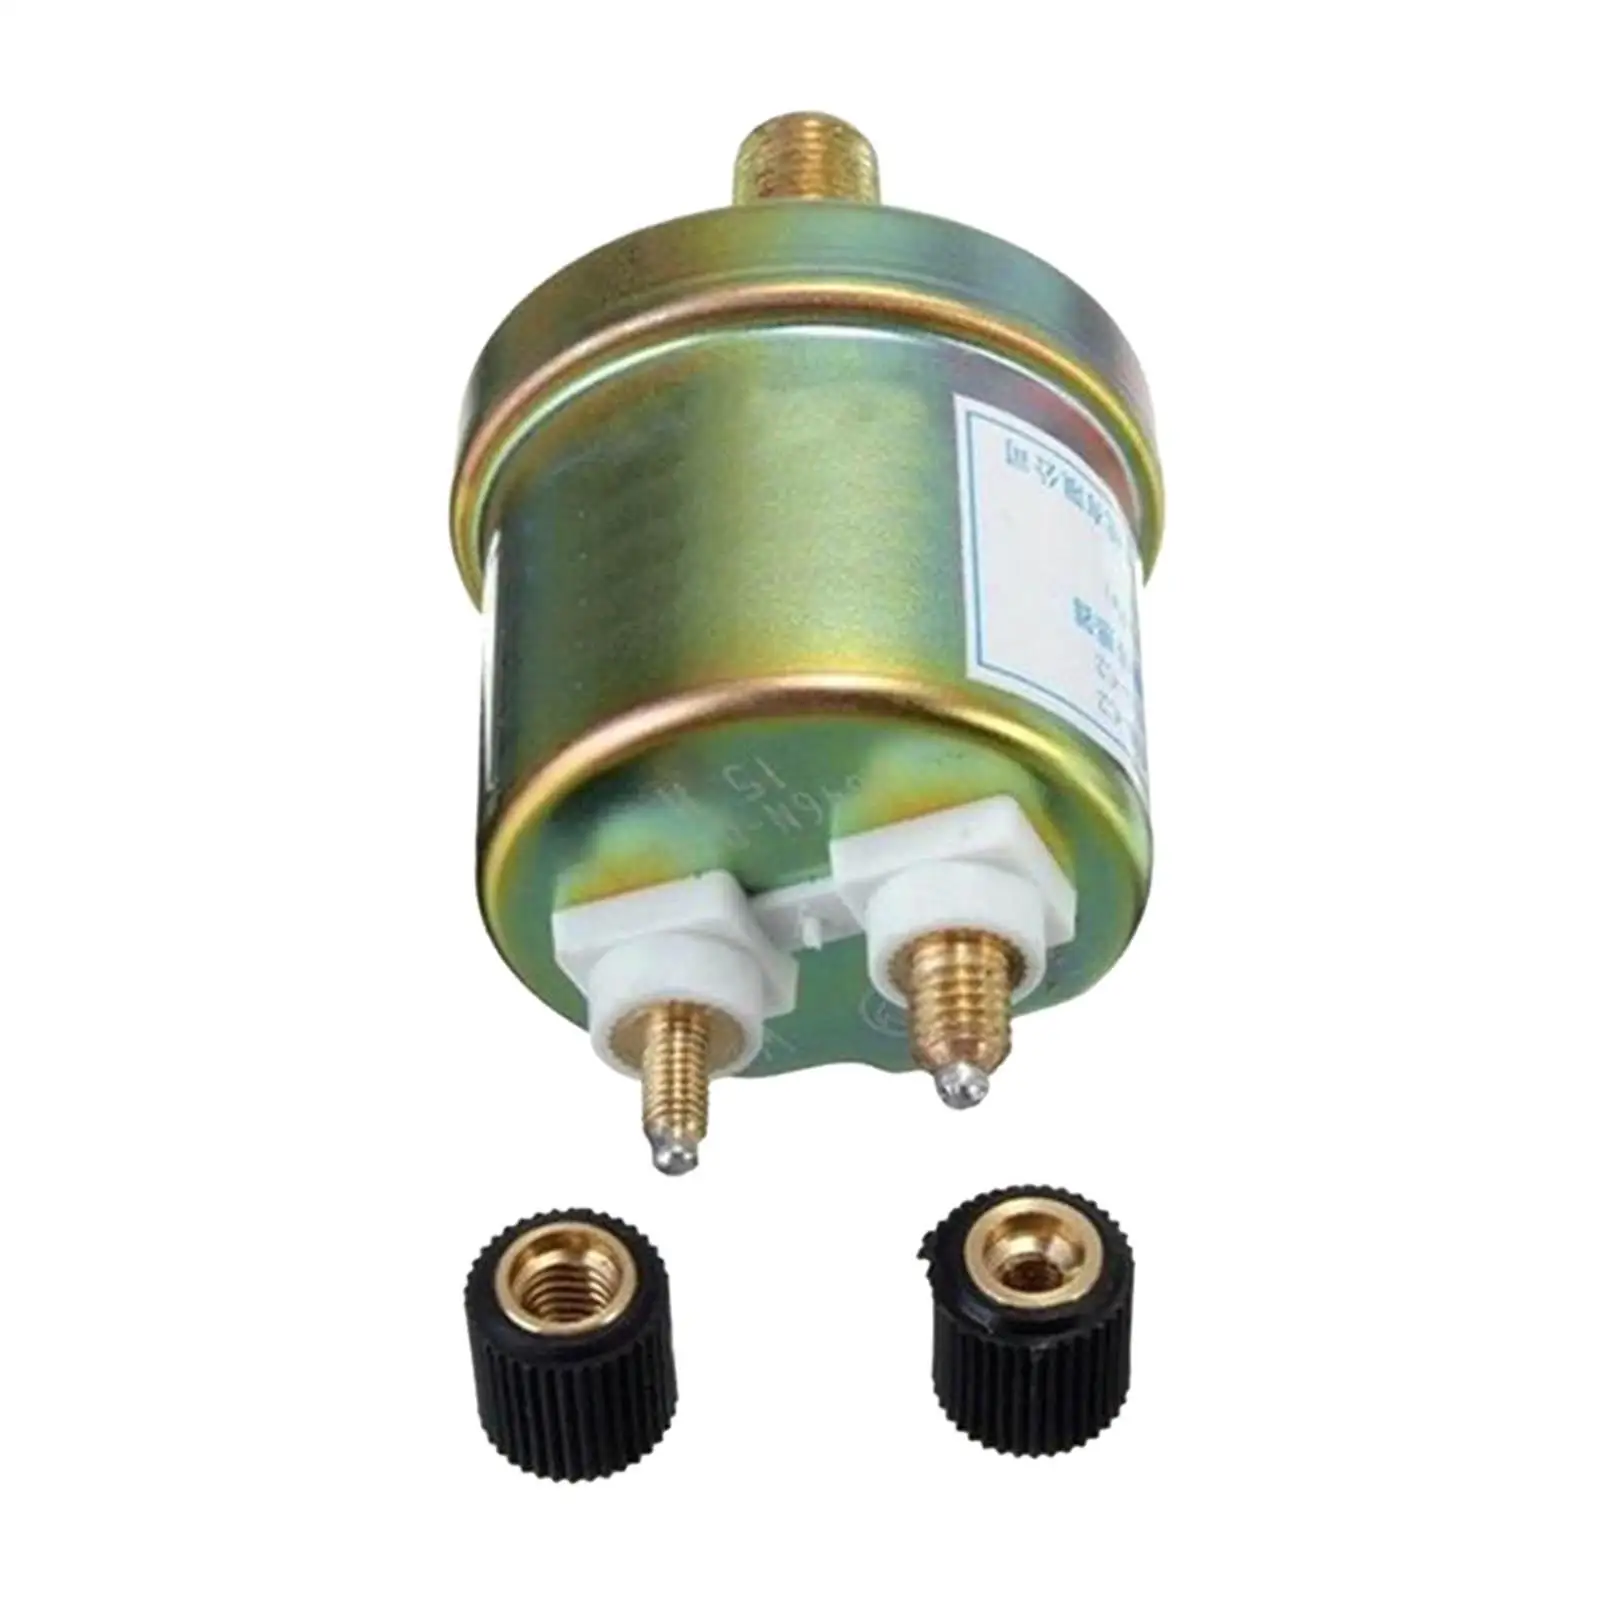 1/8NPT Screw Thread Engine Oil Pressure Sensor, Spare Parts Measuring Range 0 to 1.0 Mpa